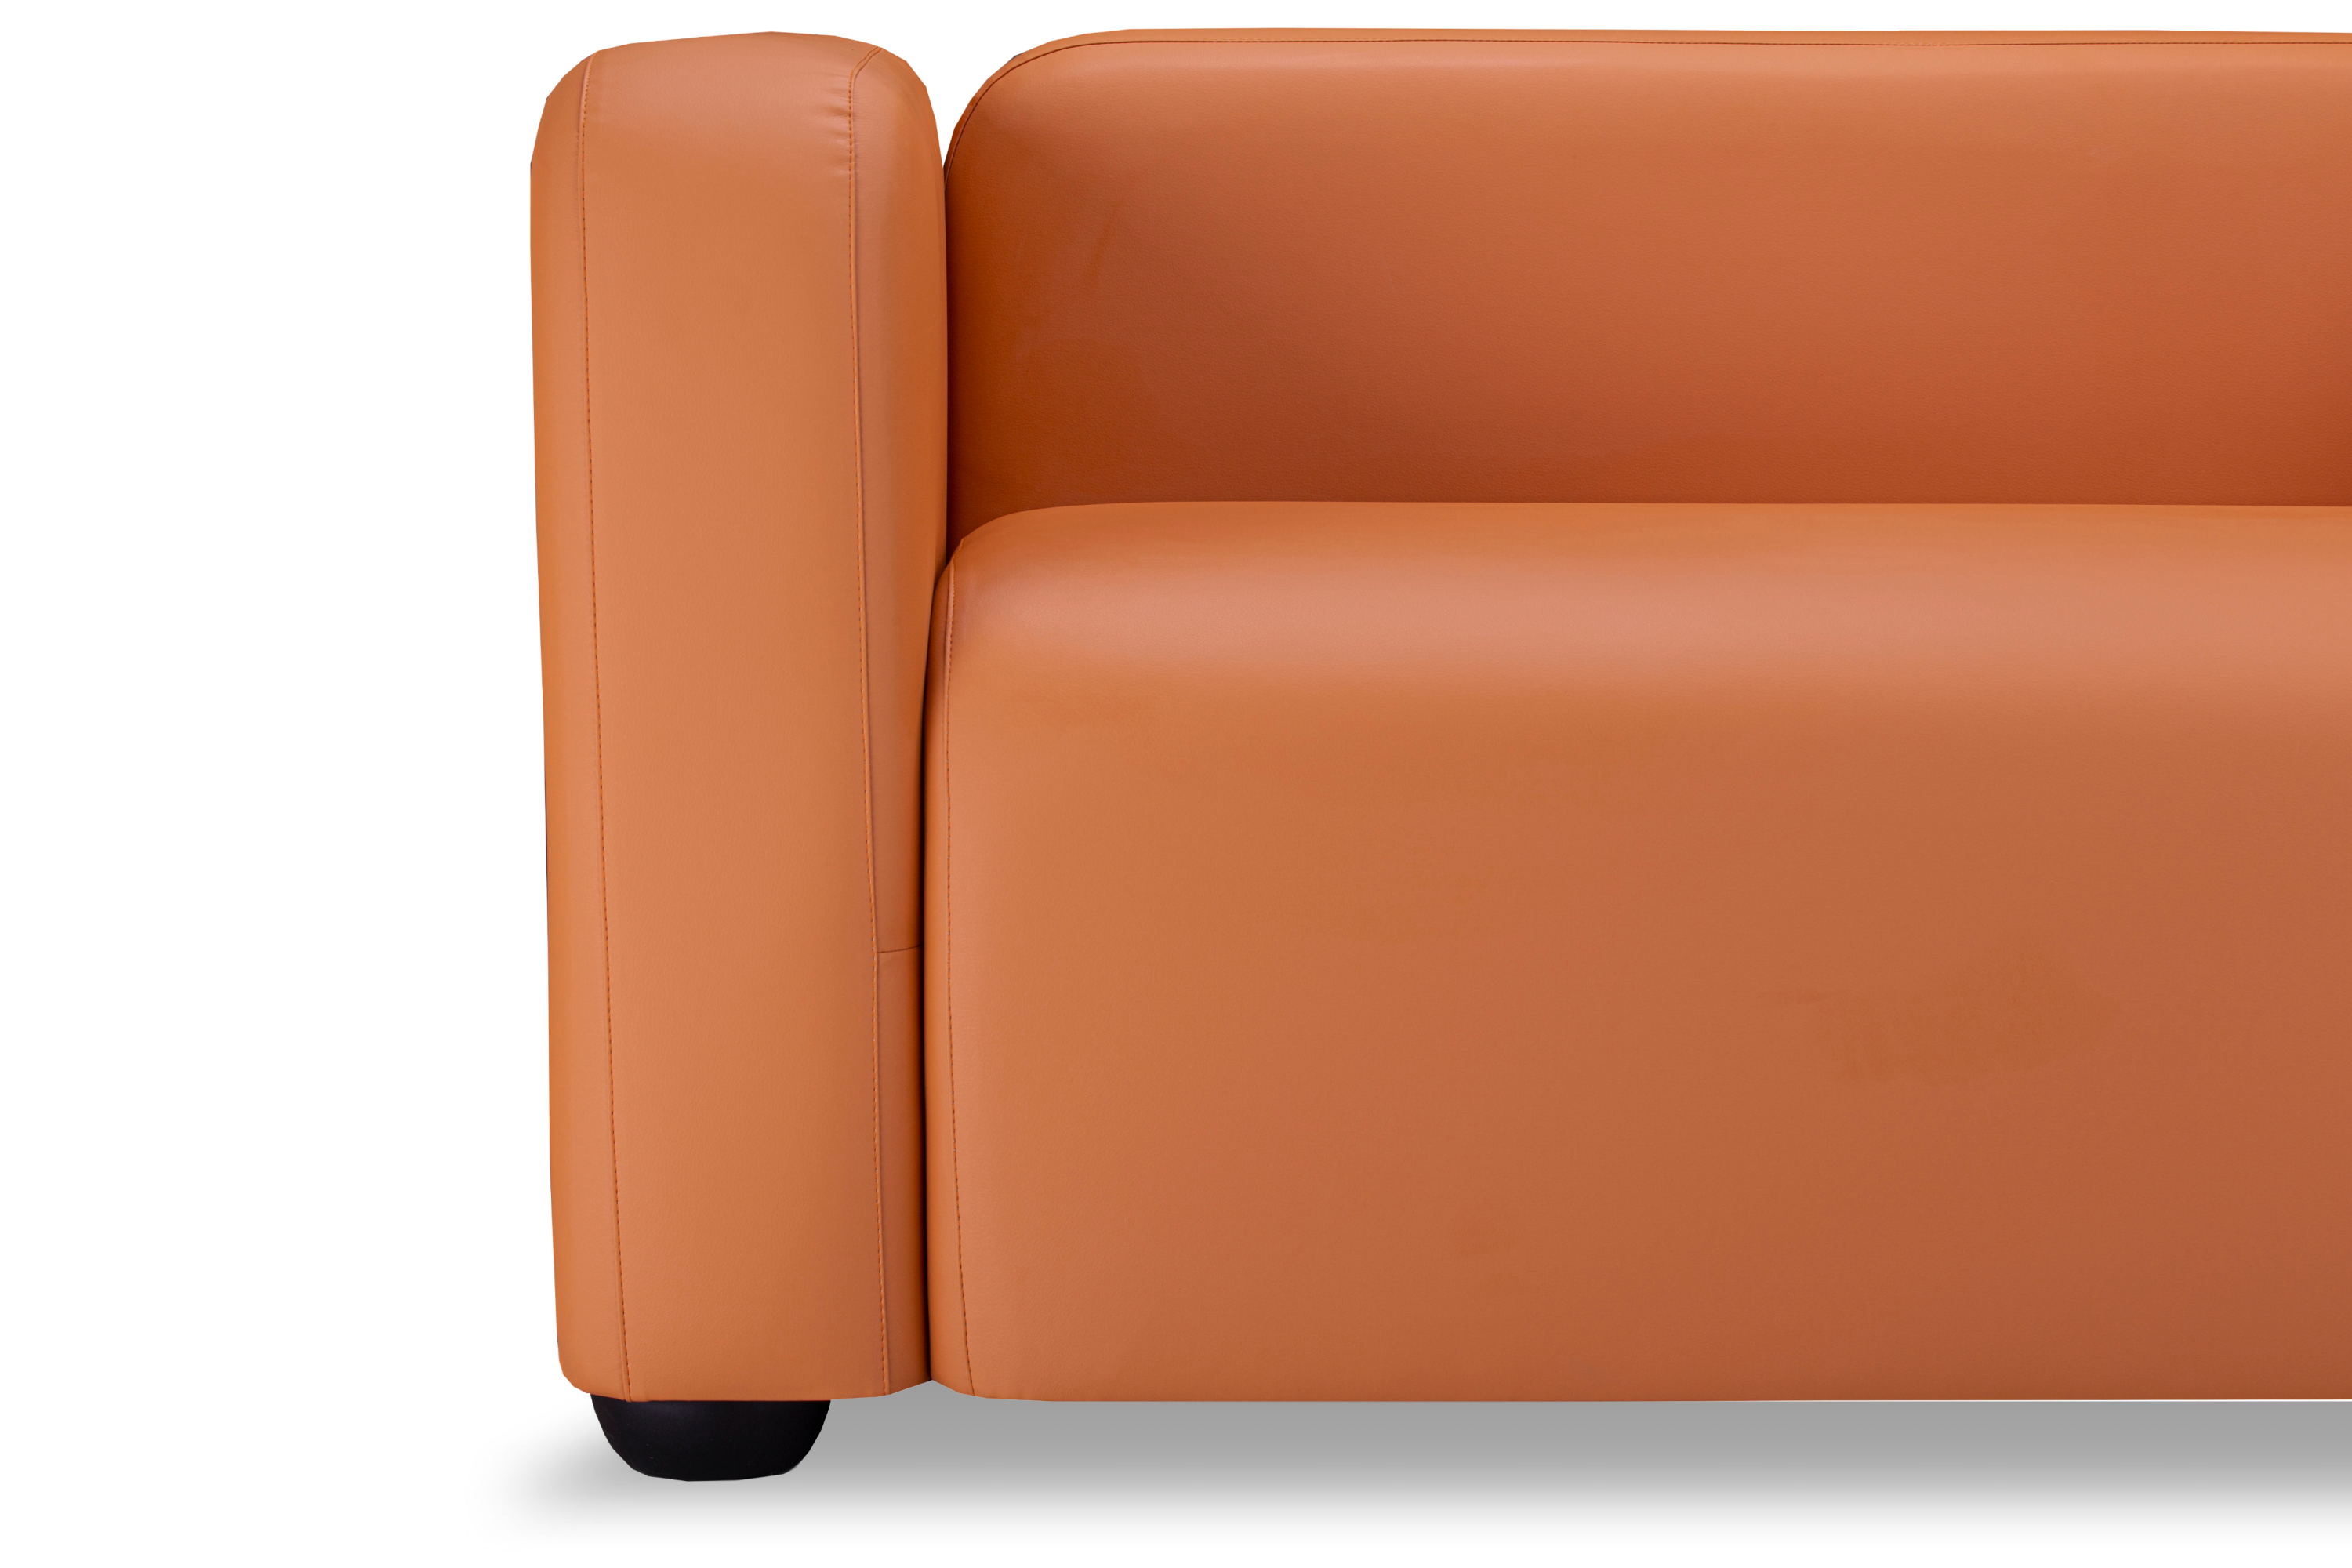 Фото №1 Квадрато двухместный диван экокожа Санторини Дарк оранж